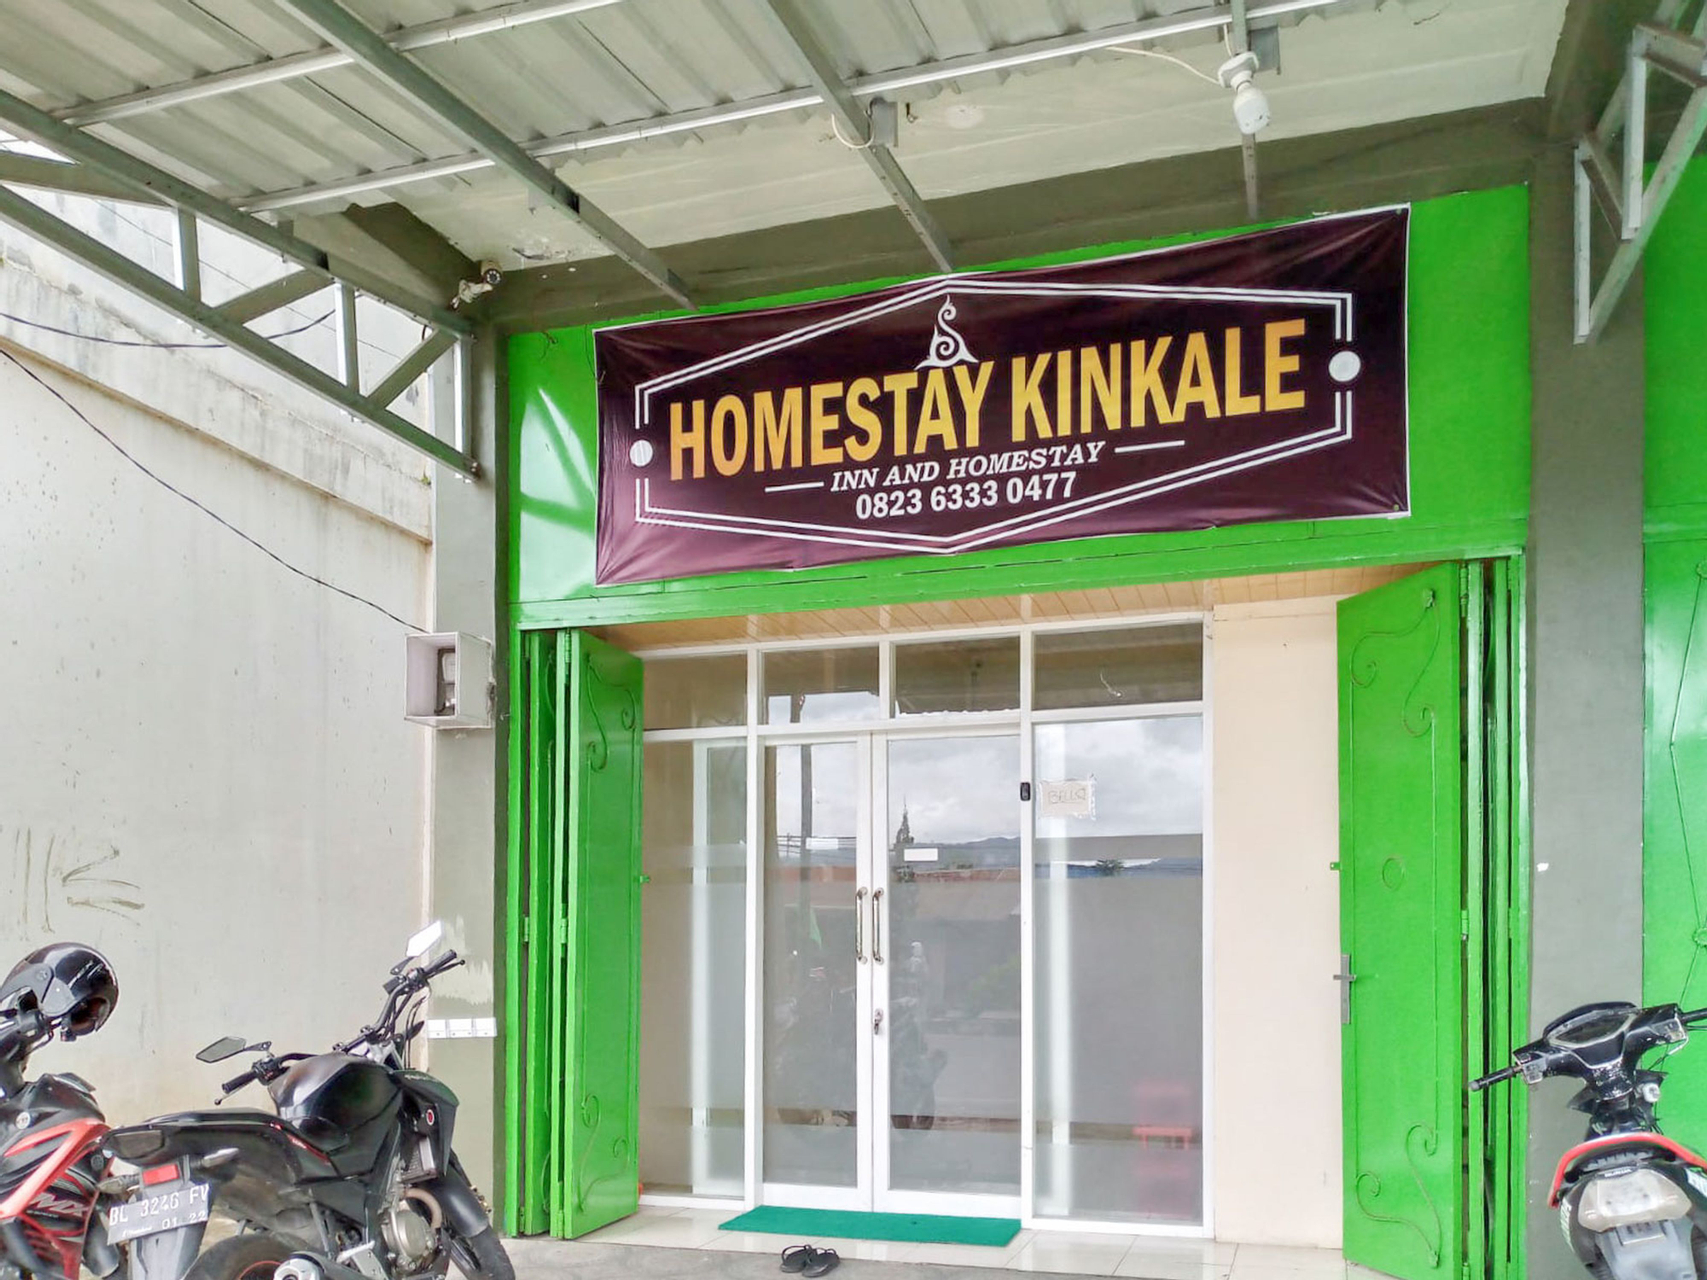 Kinkale Homestay RedPartner, Aceh Tengah